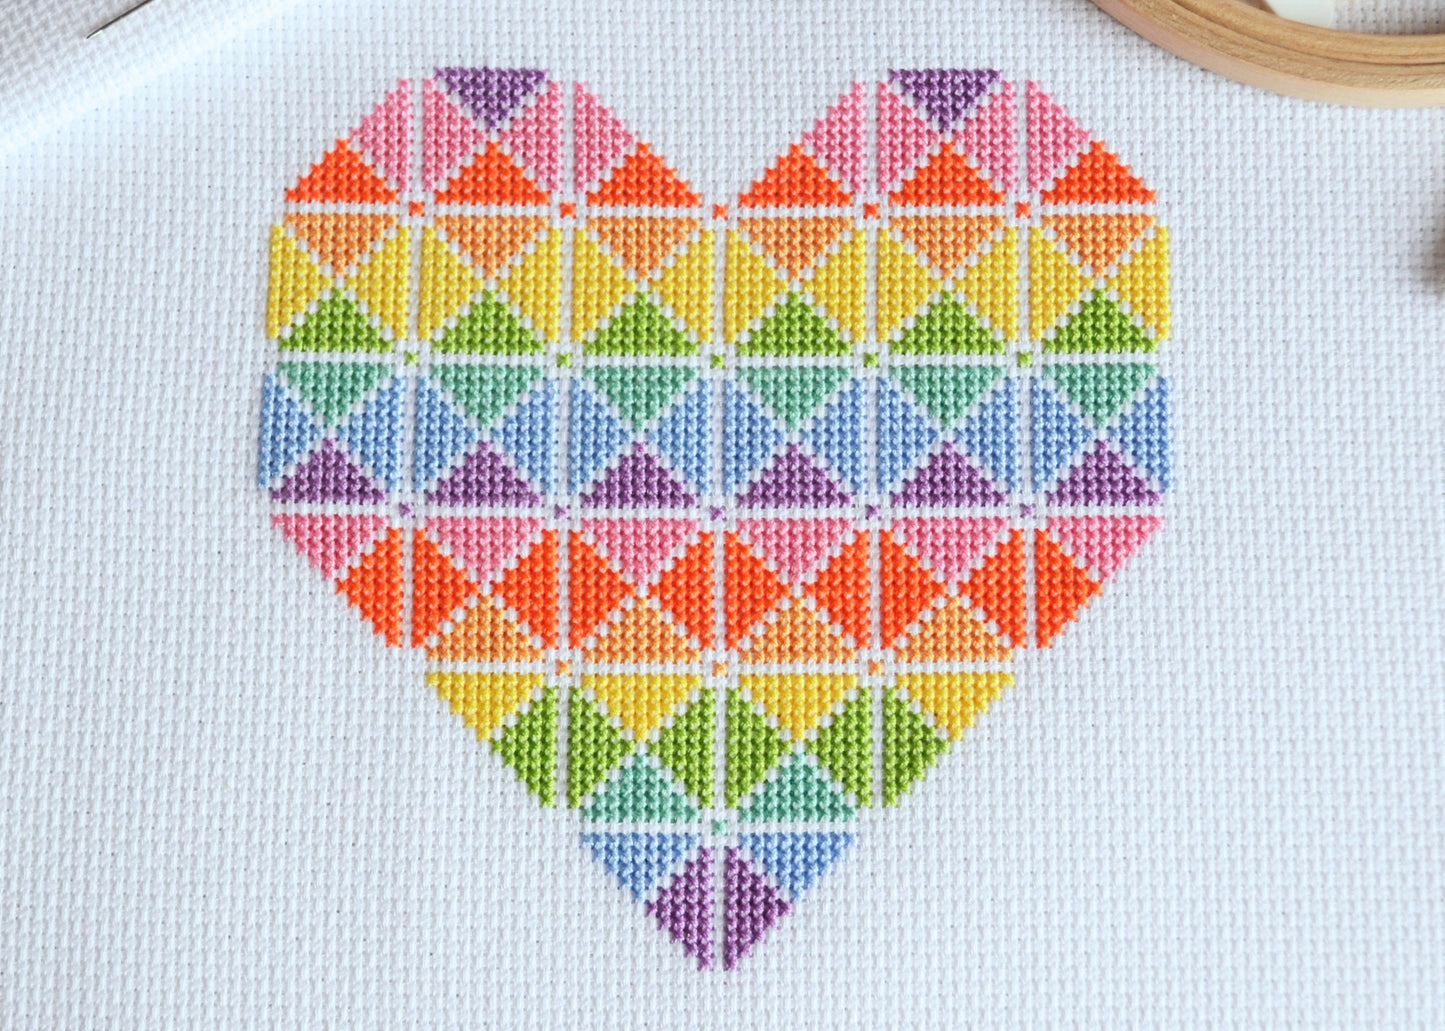 Geometric Heart Cross Stitch Kit